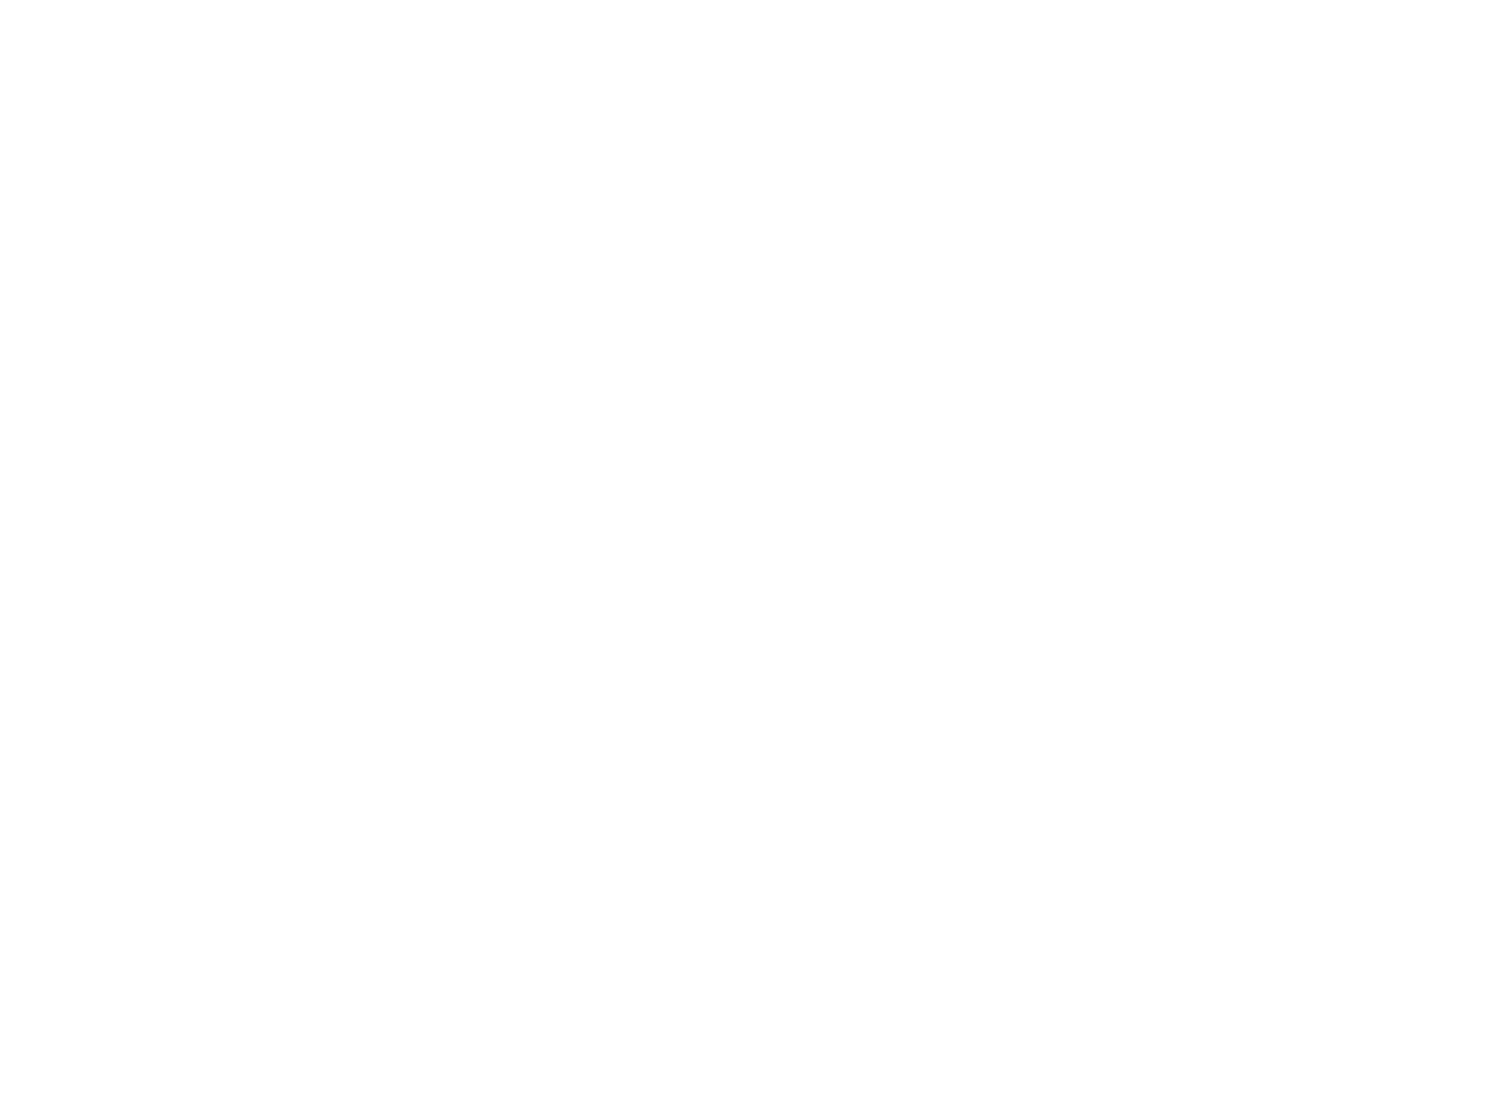 Late Apex Simulators